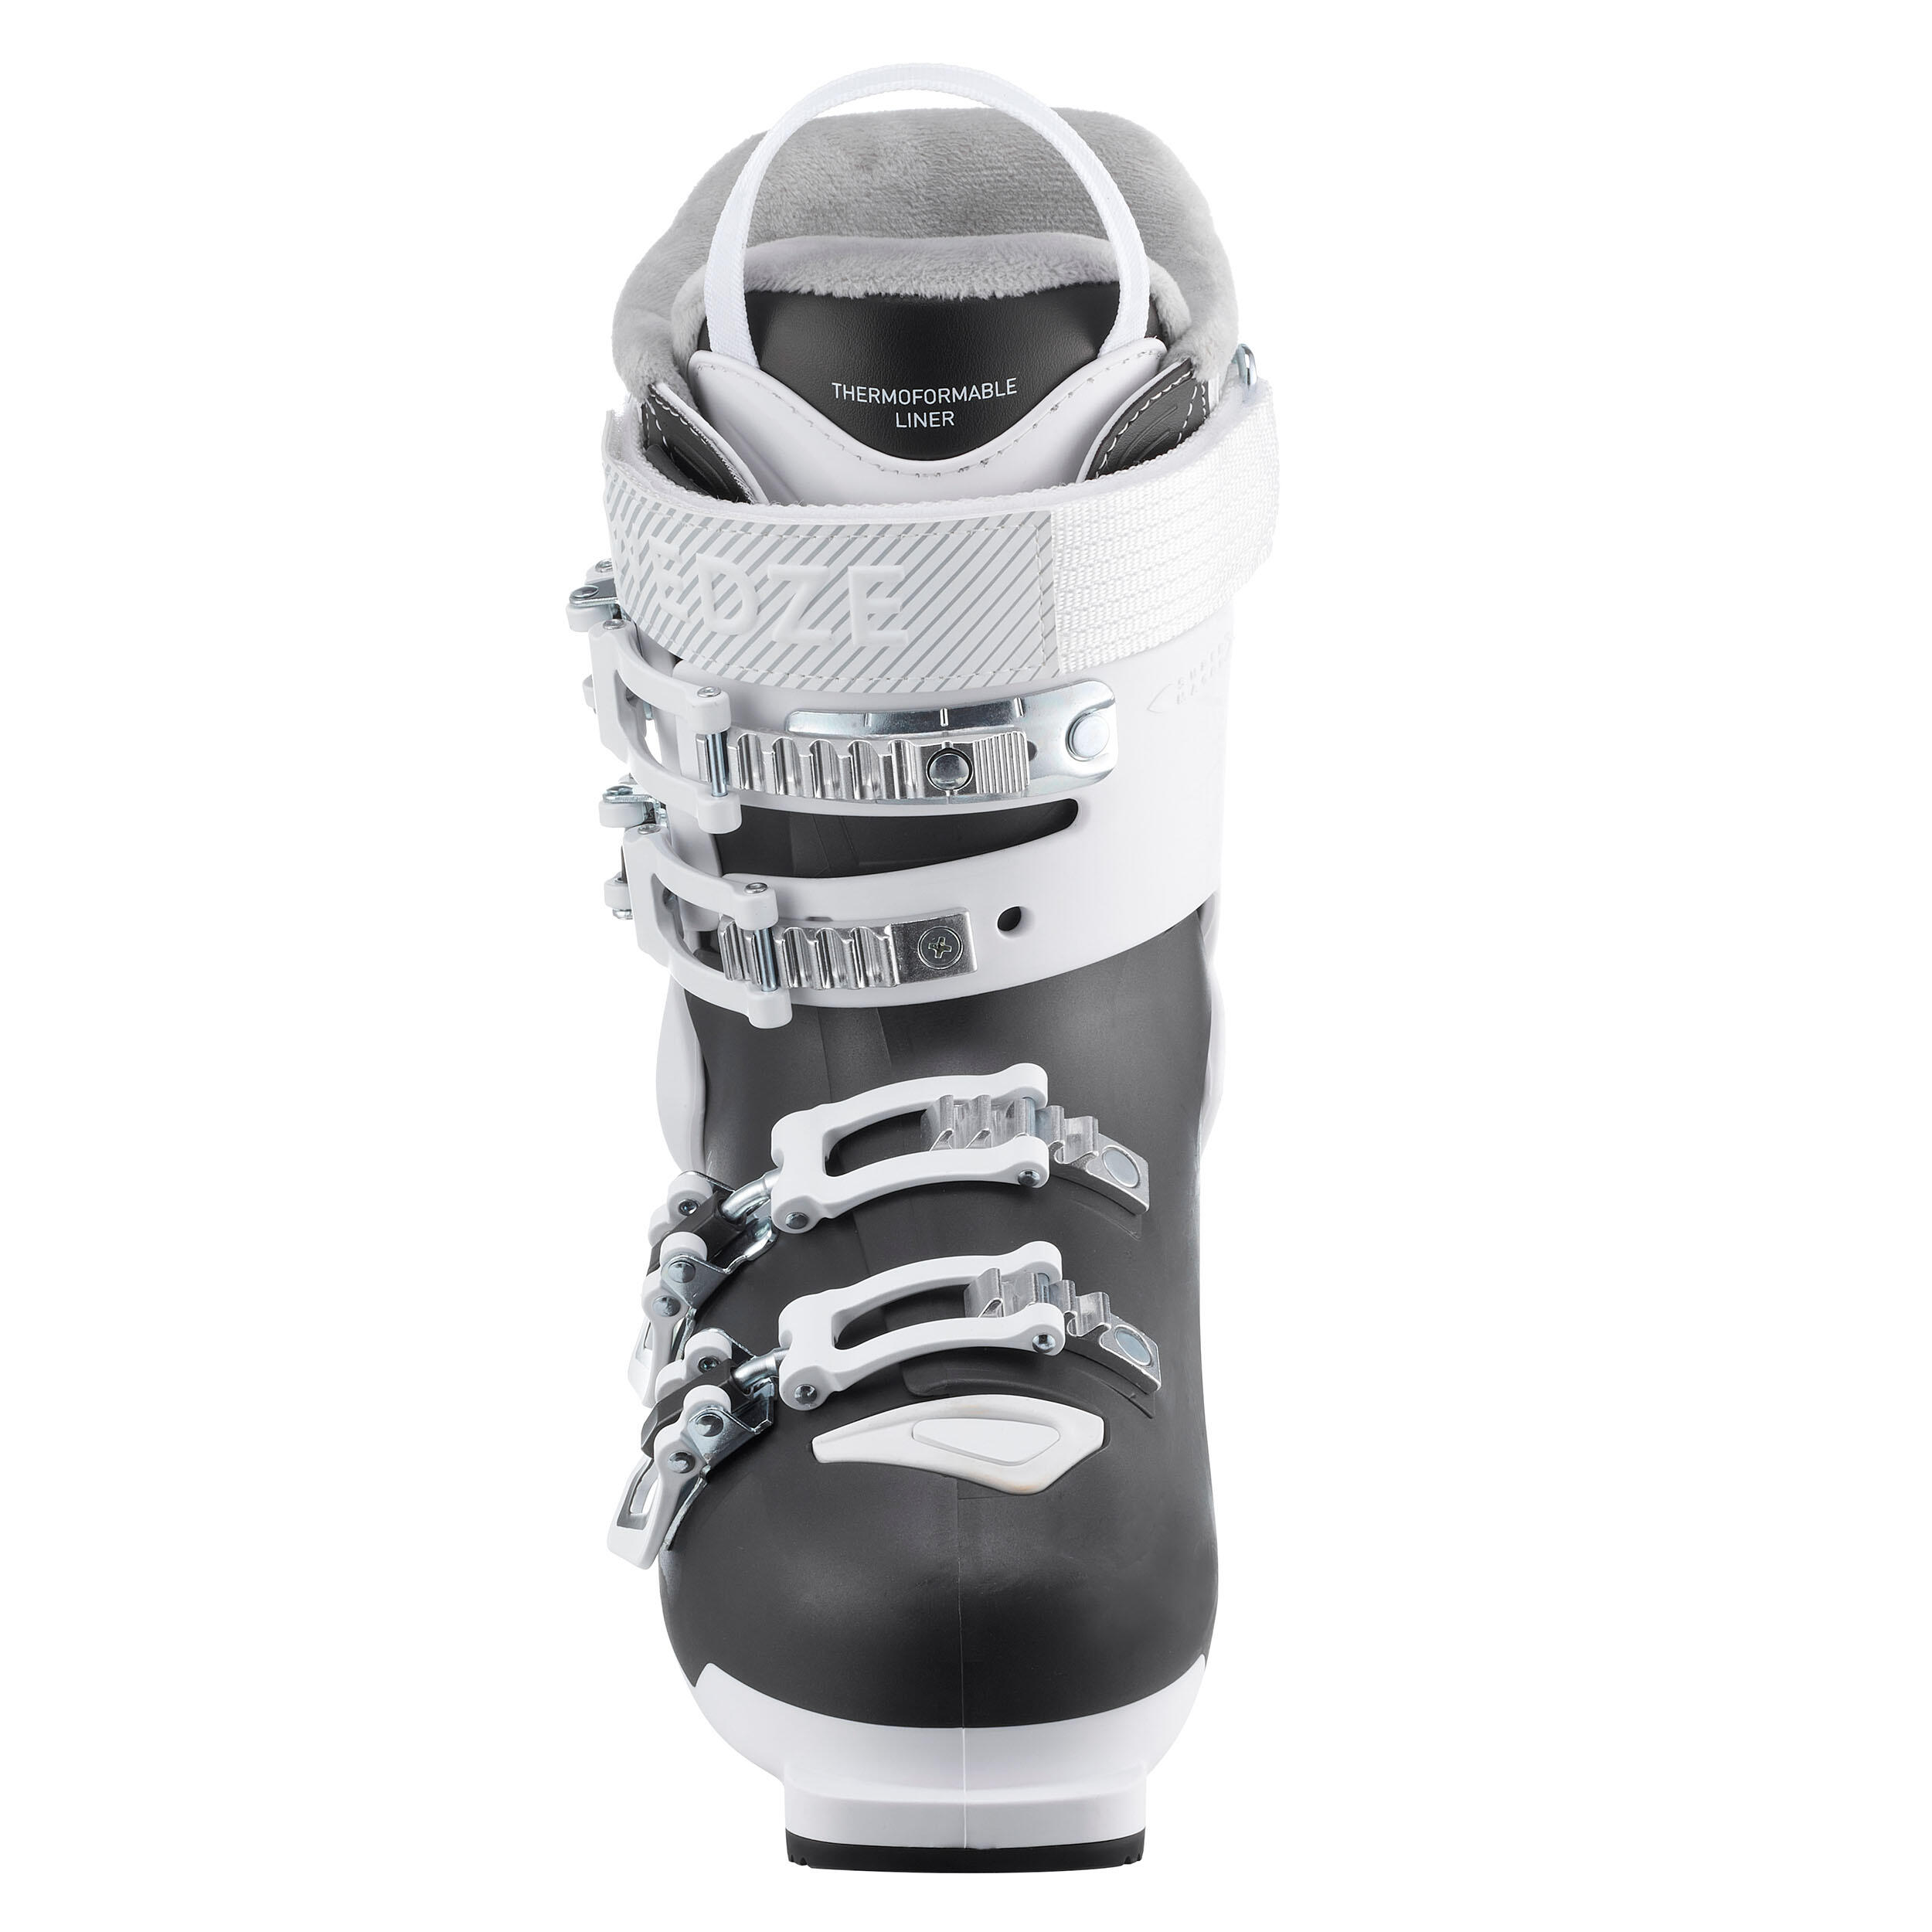 580 Ski Boots - Women - WEDZE